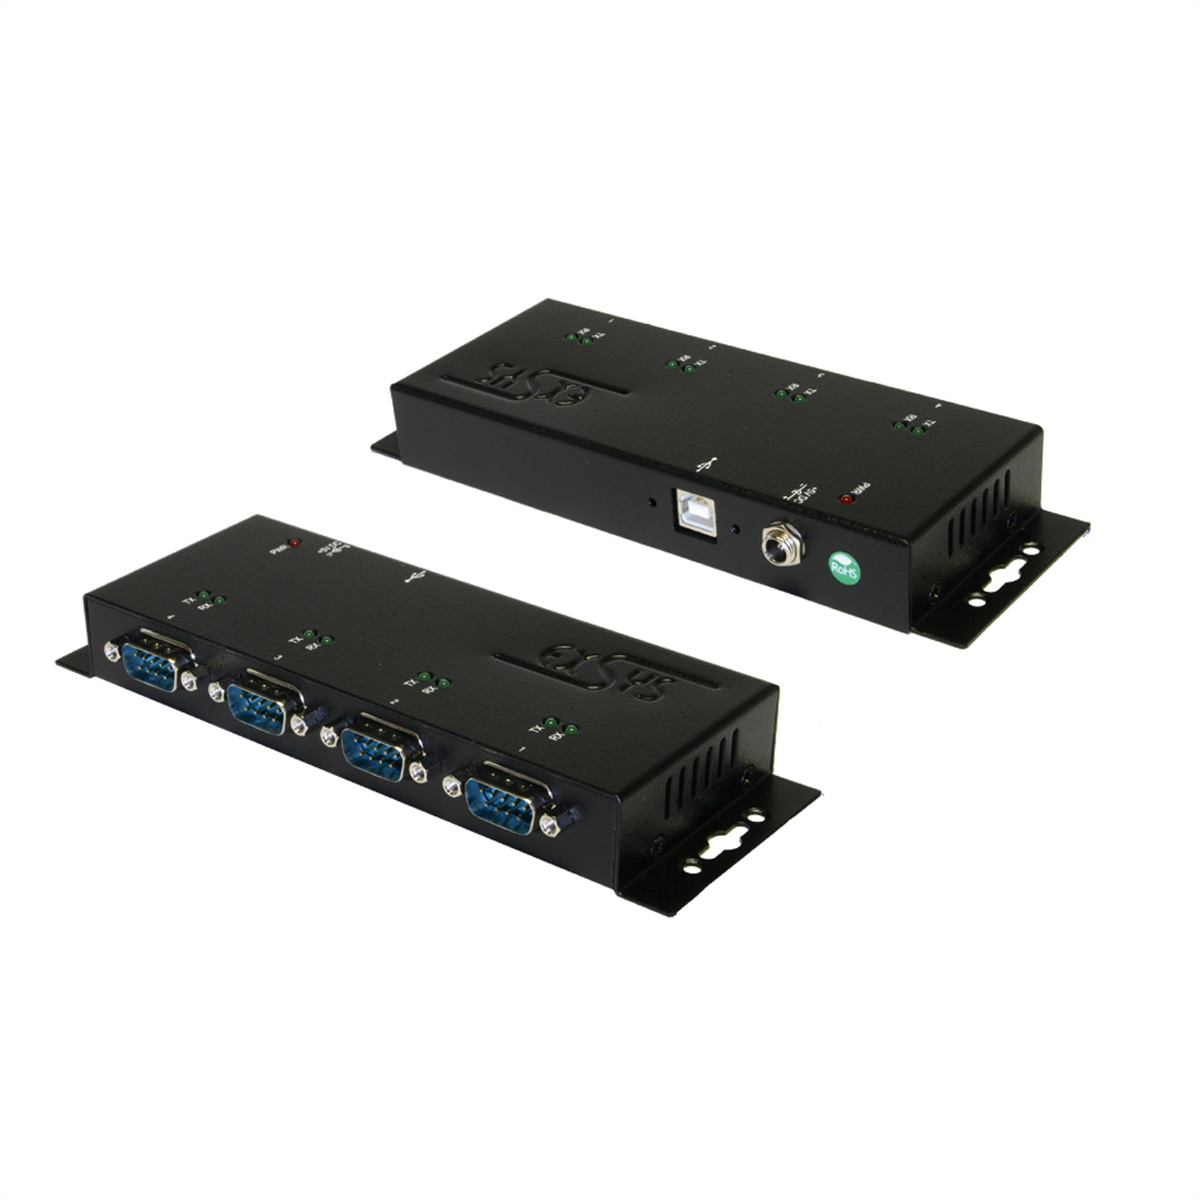 EXSYS EX 1334HMV-2 - Serieller Adapter - USB2.0 - RS-232 - 4 Anschlüsse (EX-1334HMV-2)